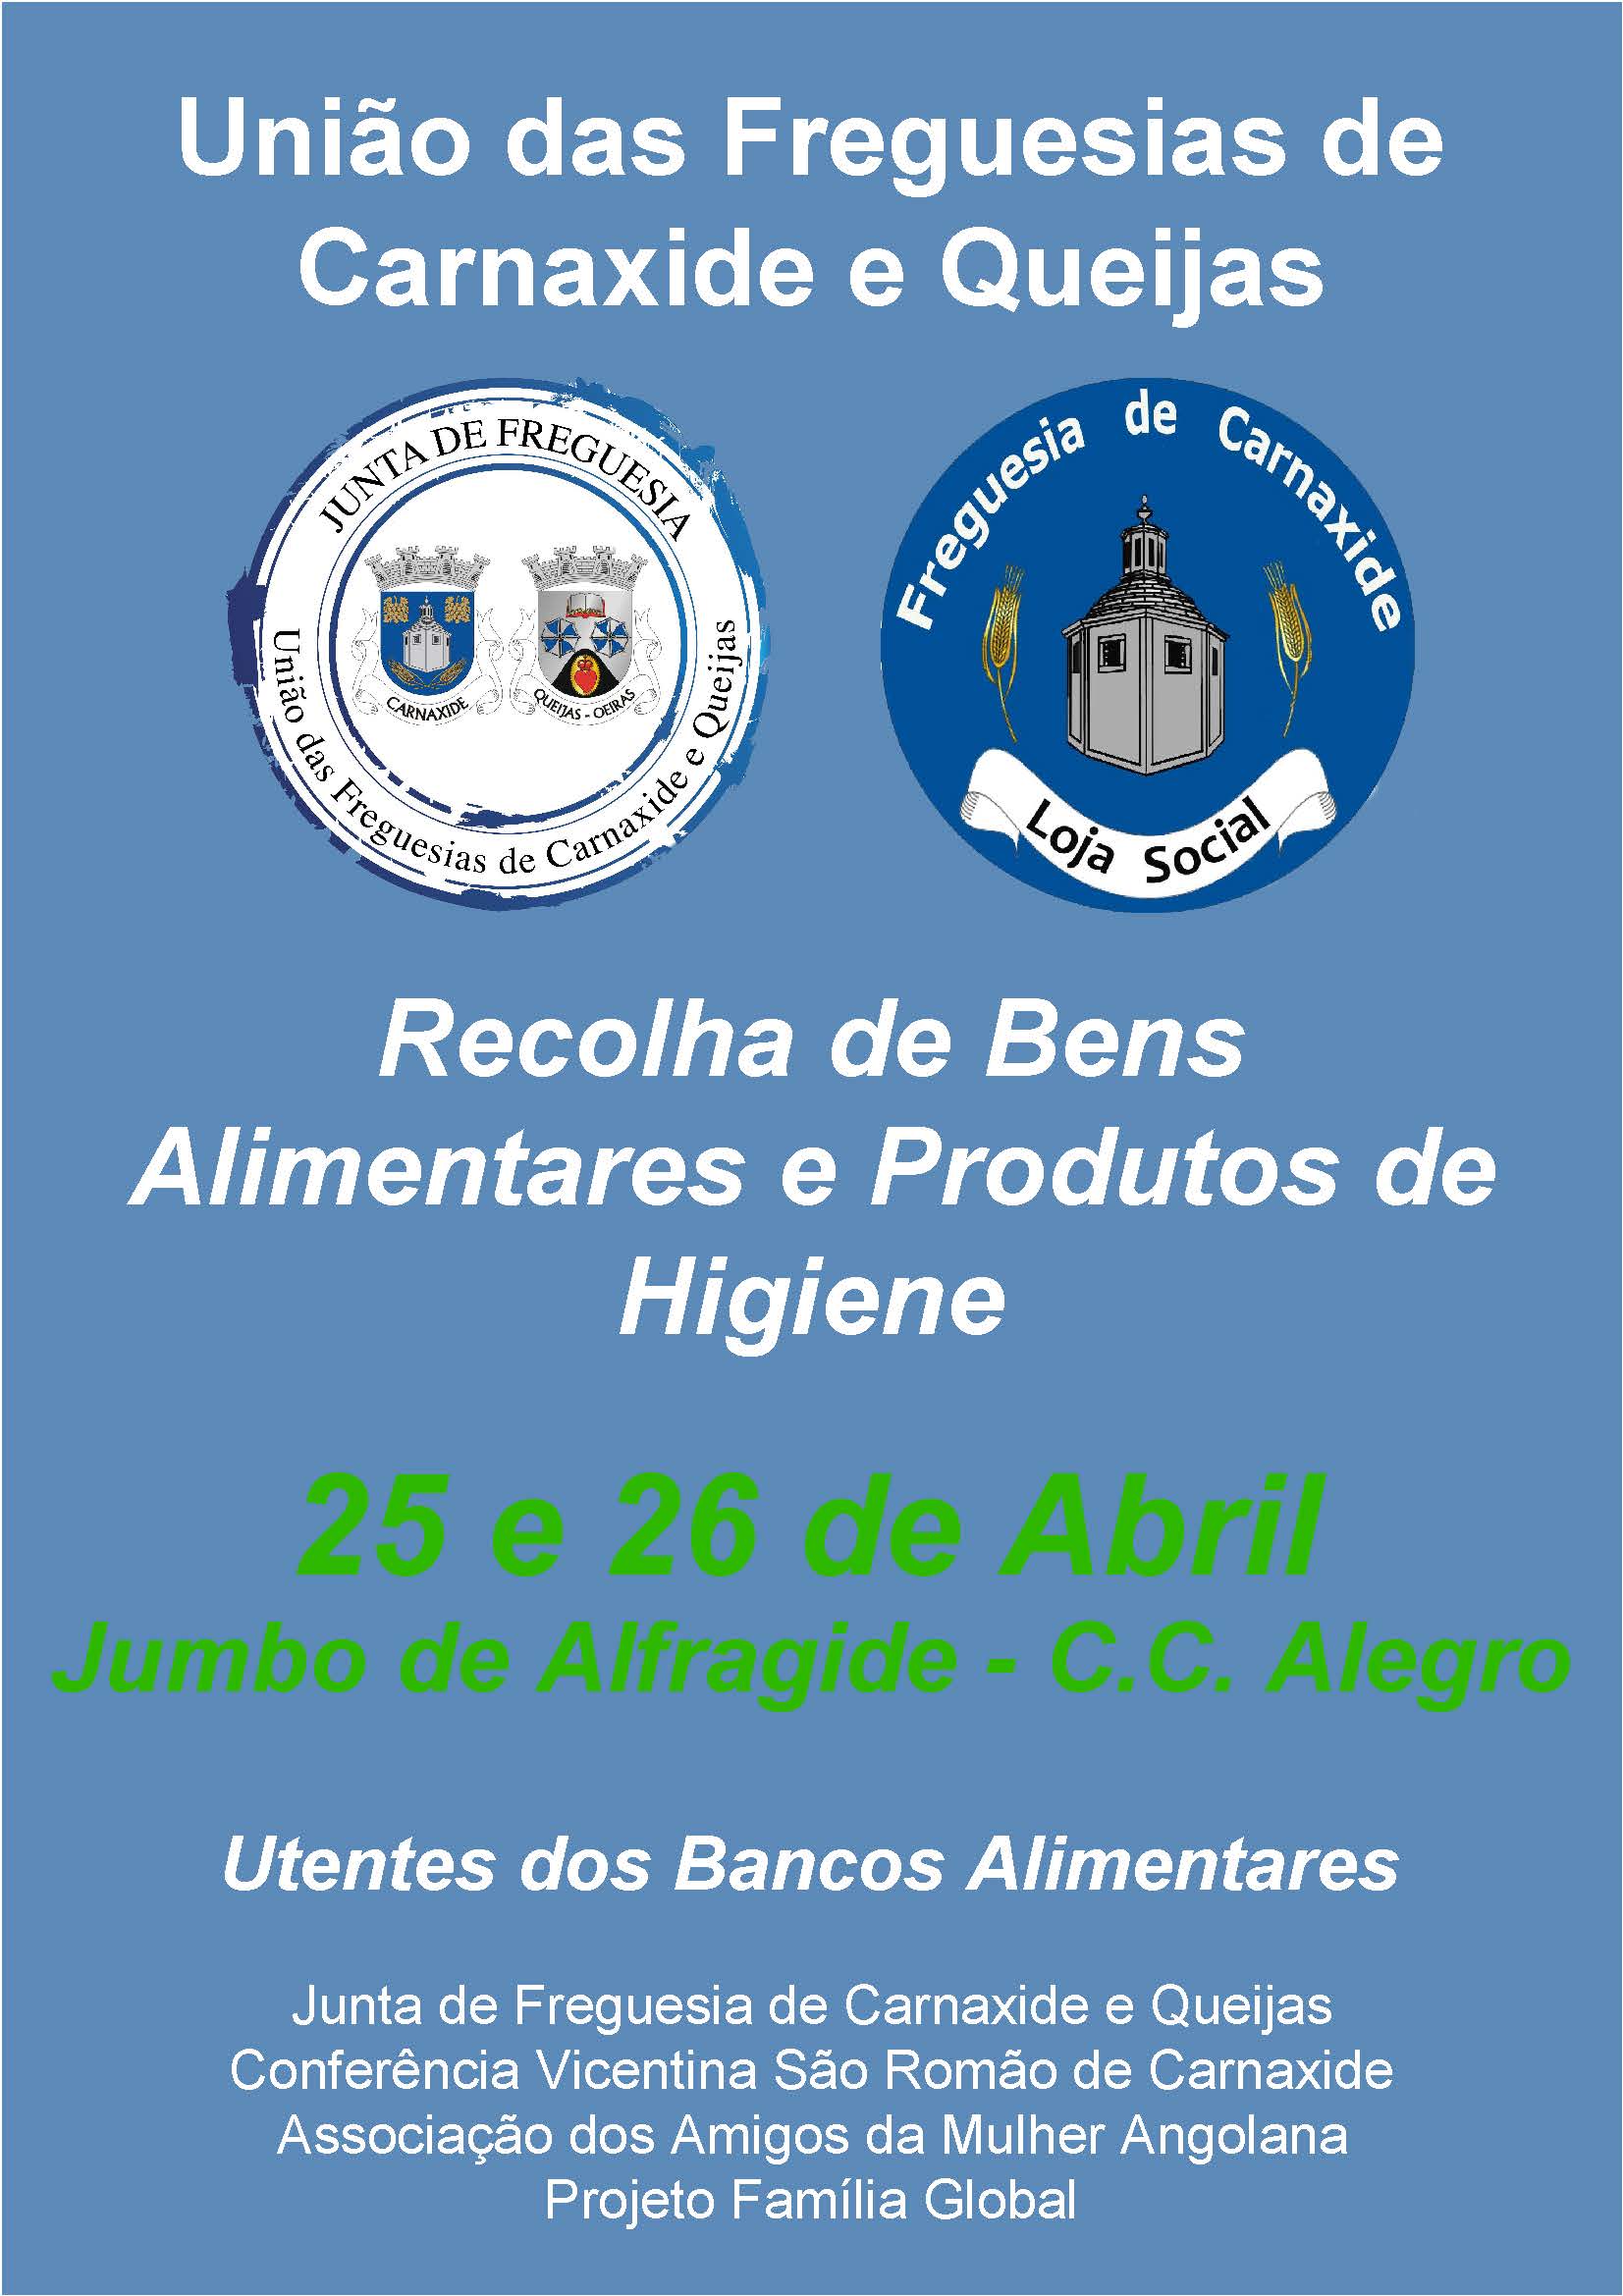 Campanha de Recolha de Alimentos e Produtos de Higiene - Jumbo de Alfragide (25 e 26 de Abril)